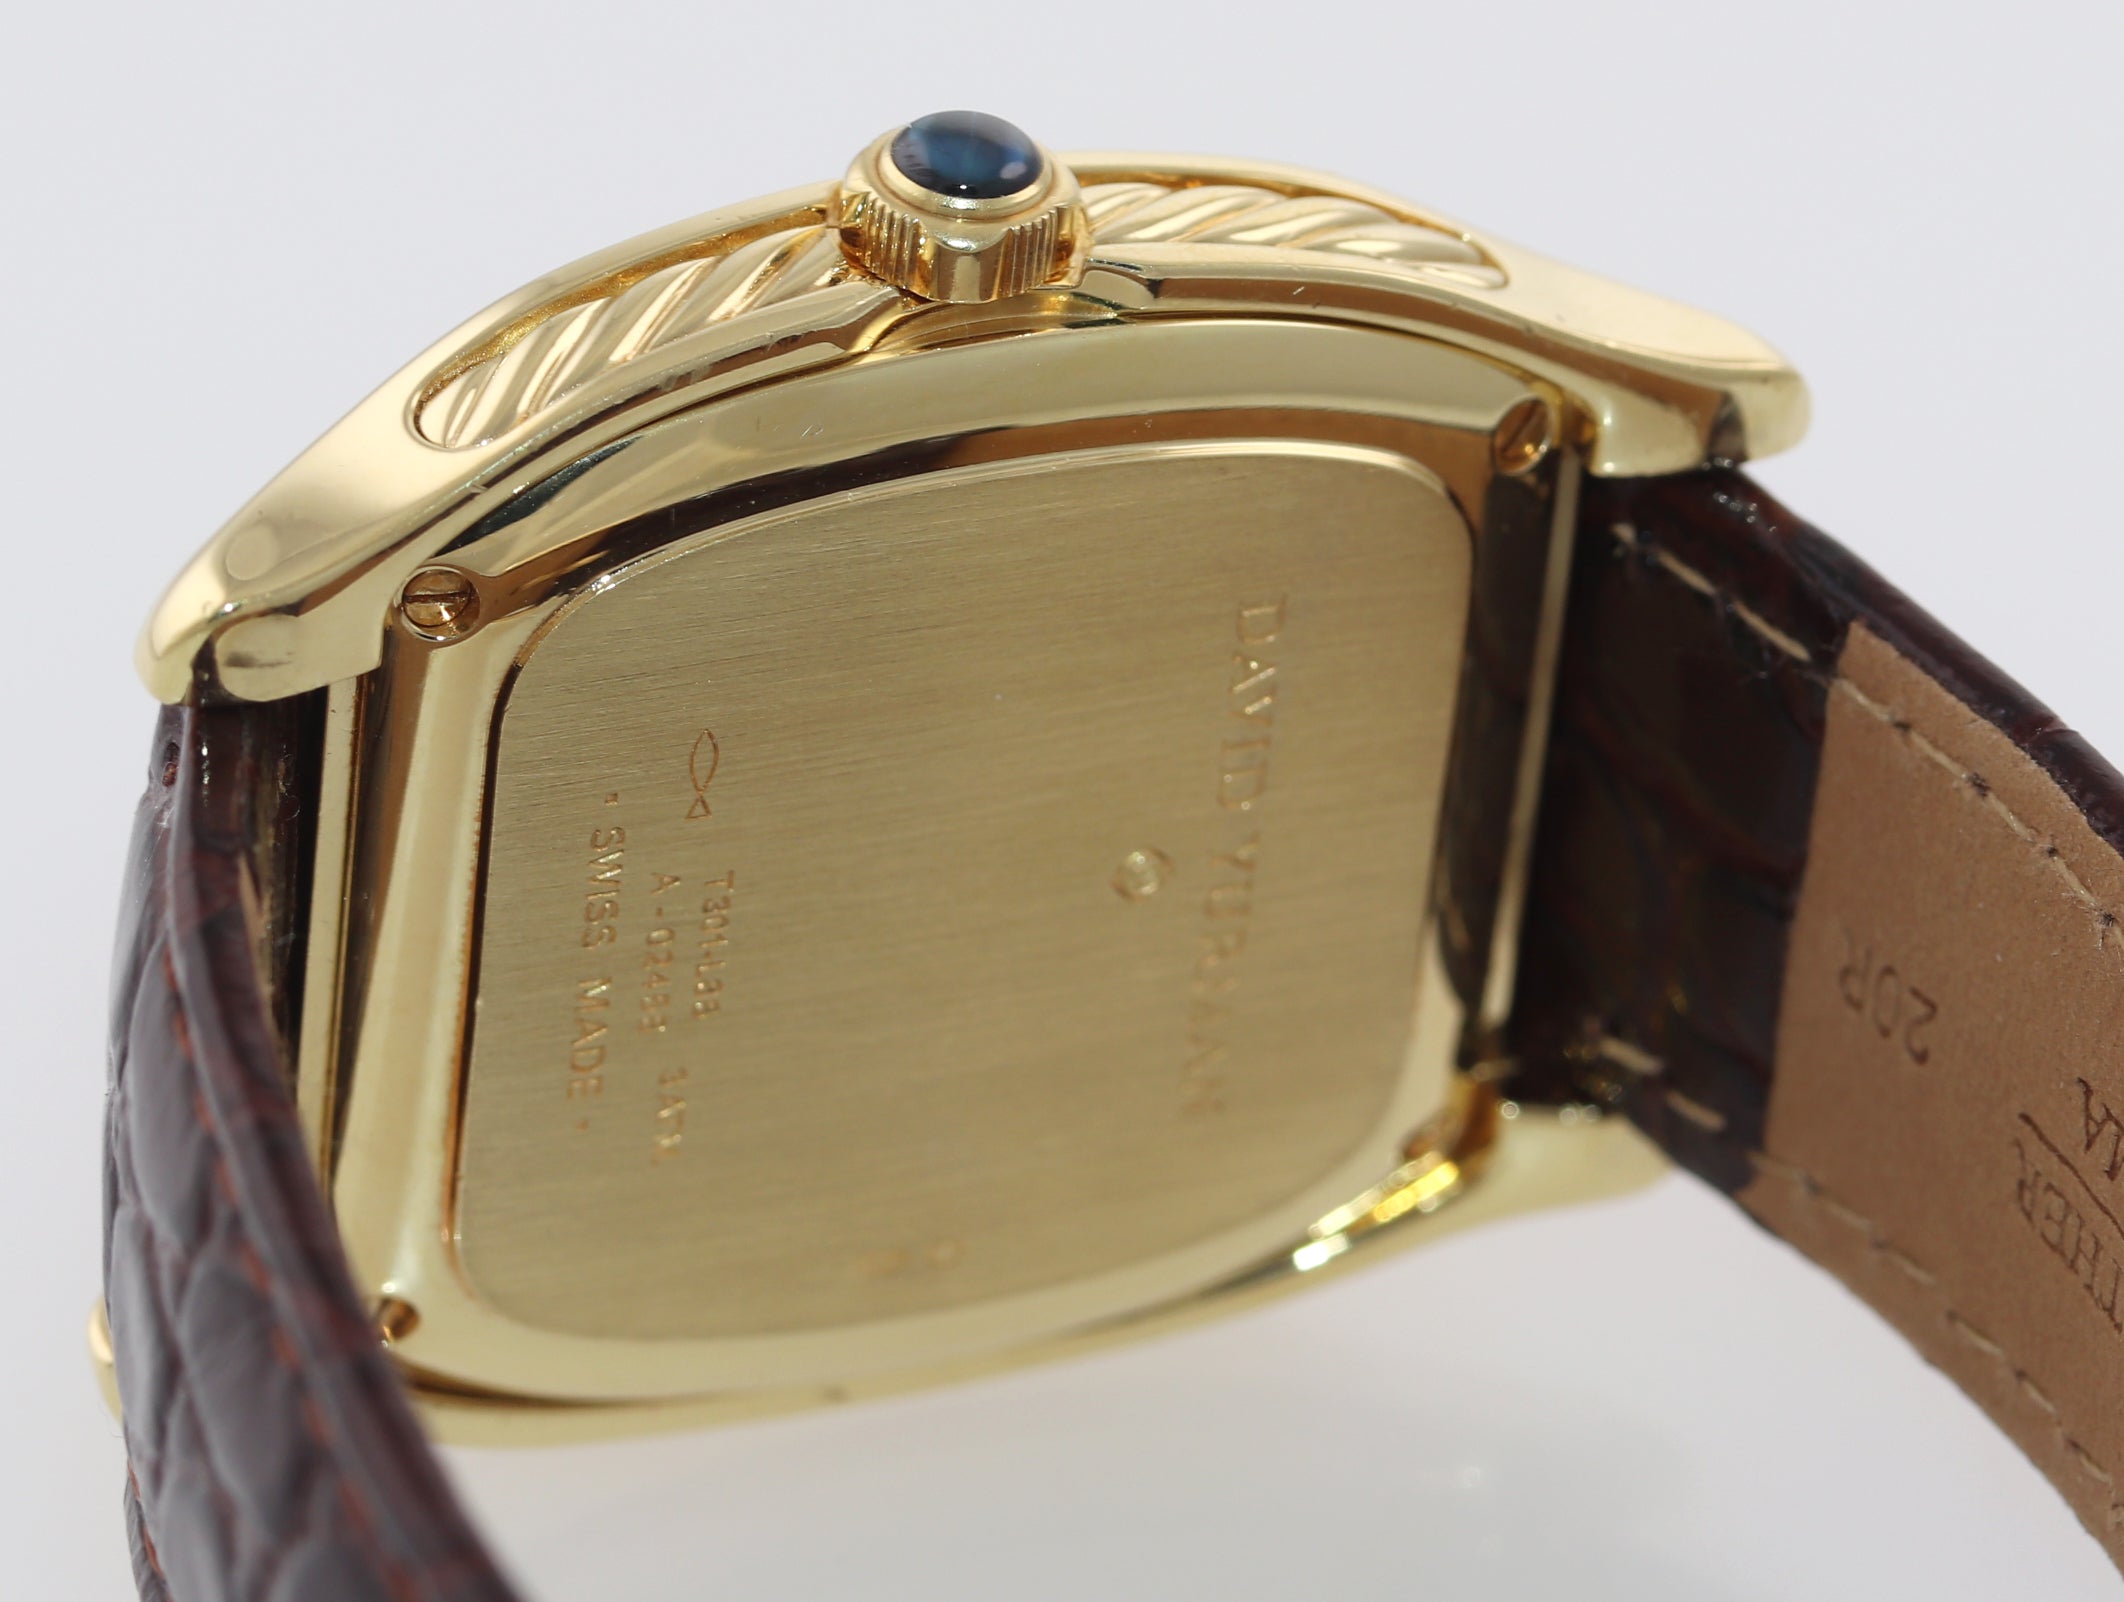 David Yurman Thoroughbred 18k Yellow Gold Automatic Date 36mm Watch T301-L88